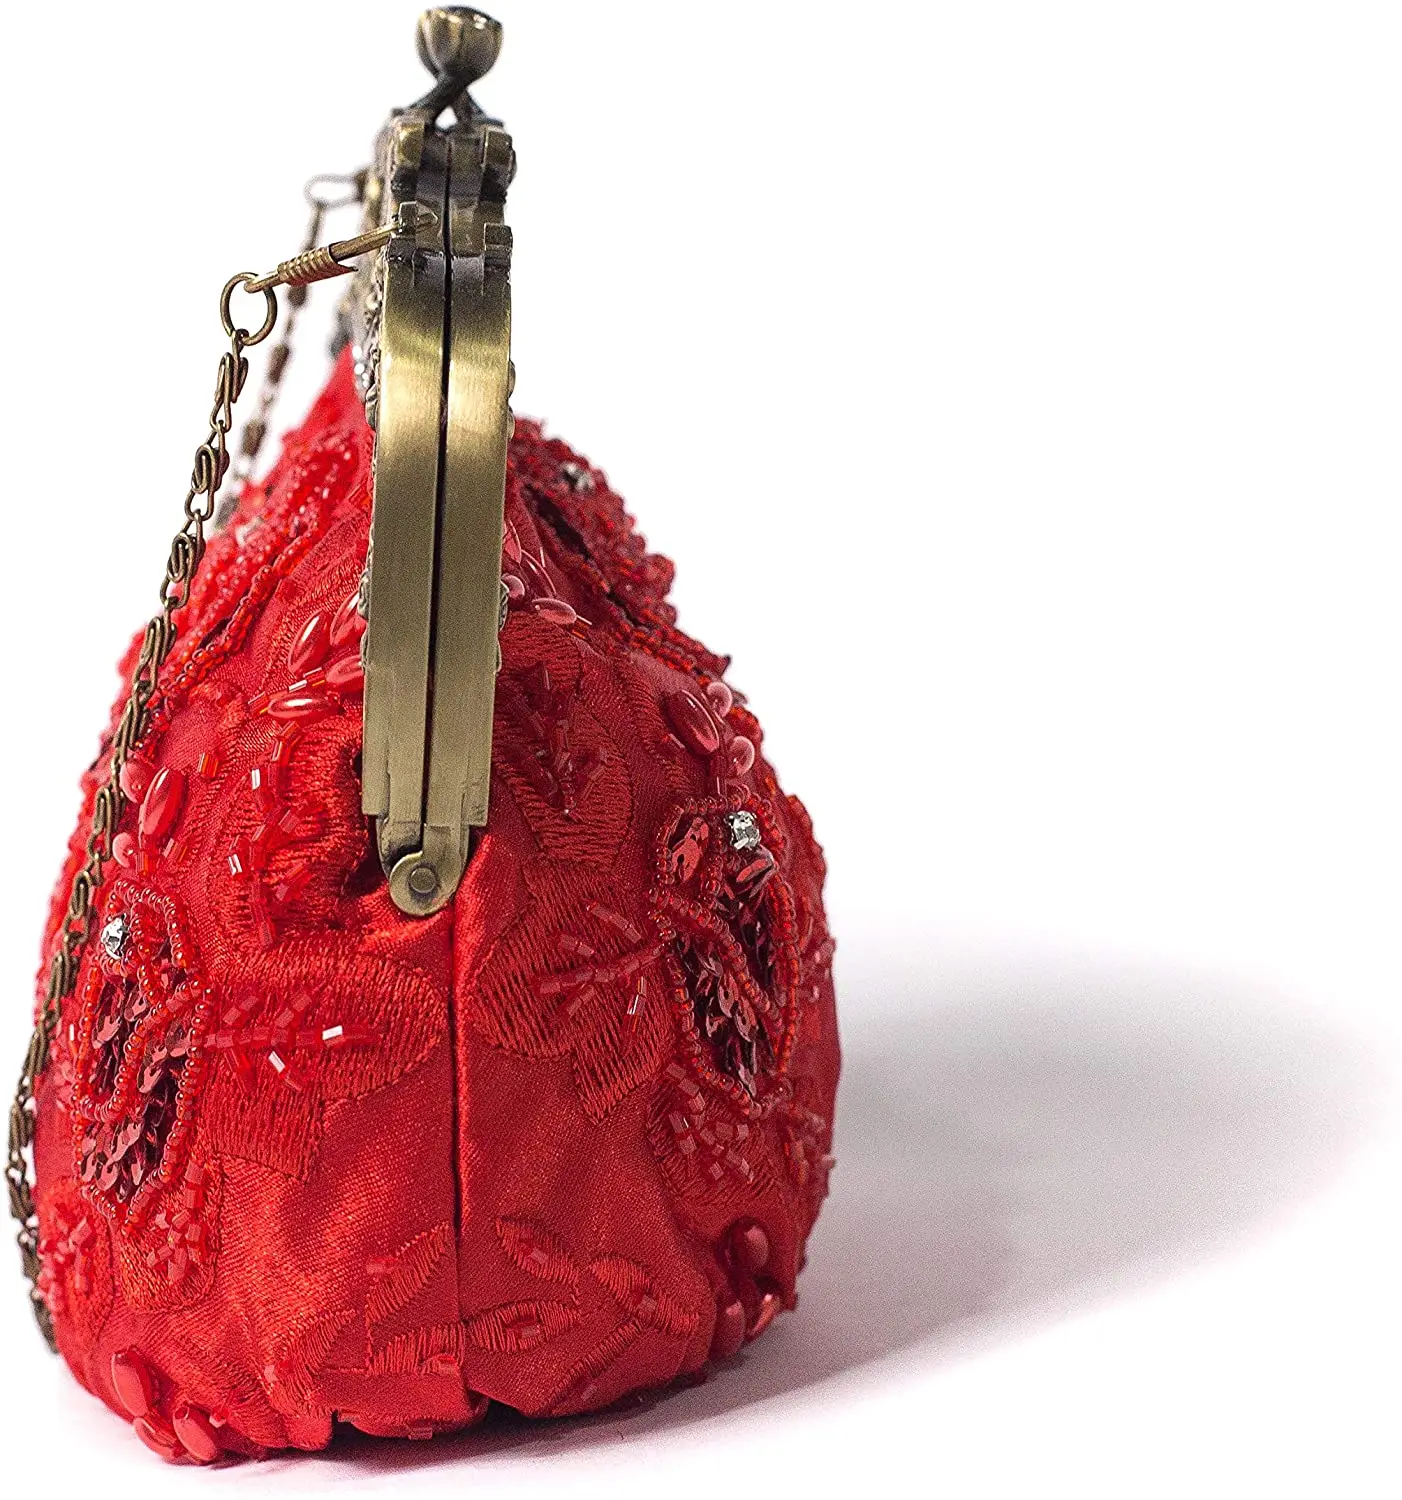 Vintage Retro Gold Clutch Bag with Metal Clasp and Chain Handbag Purse |  eBay